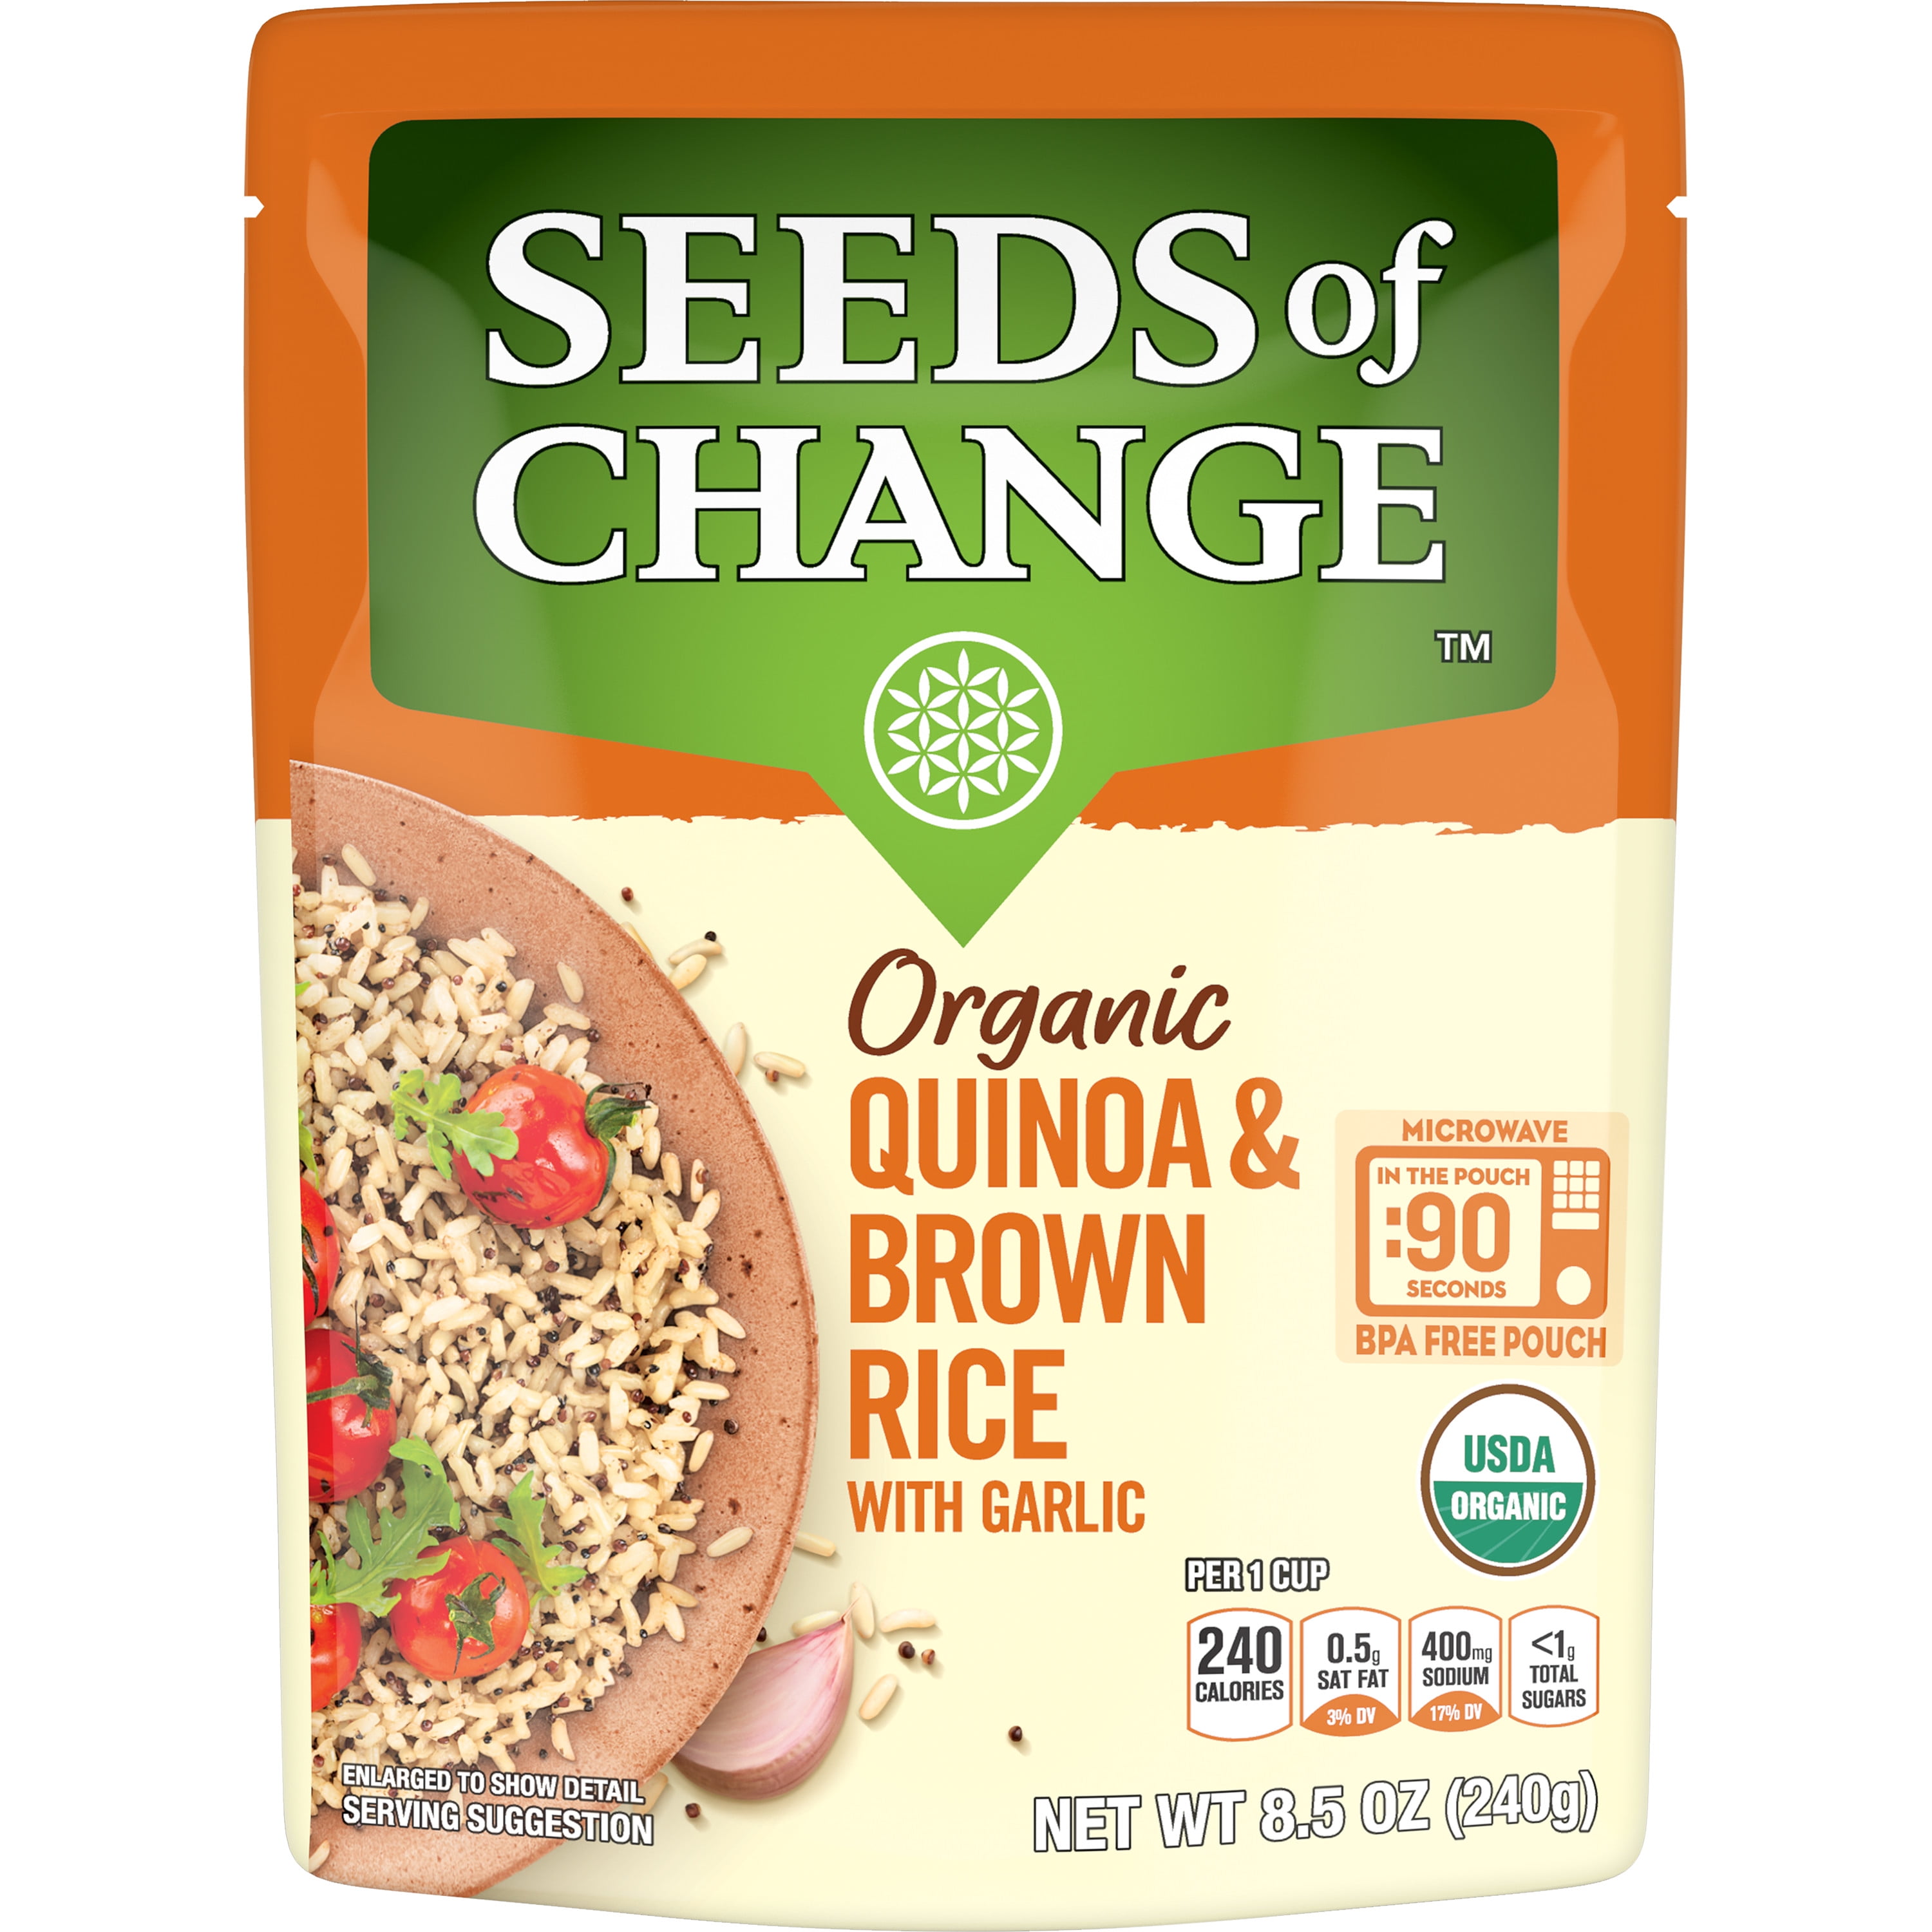 SEEDS OF CHANGE Organic Quinoa & Brown Rice, 8.5oz - Walmart.com ...